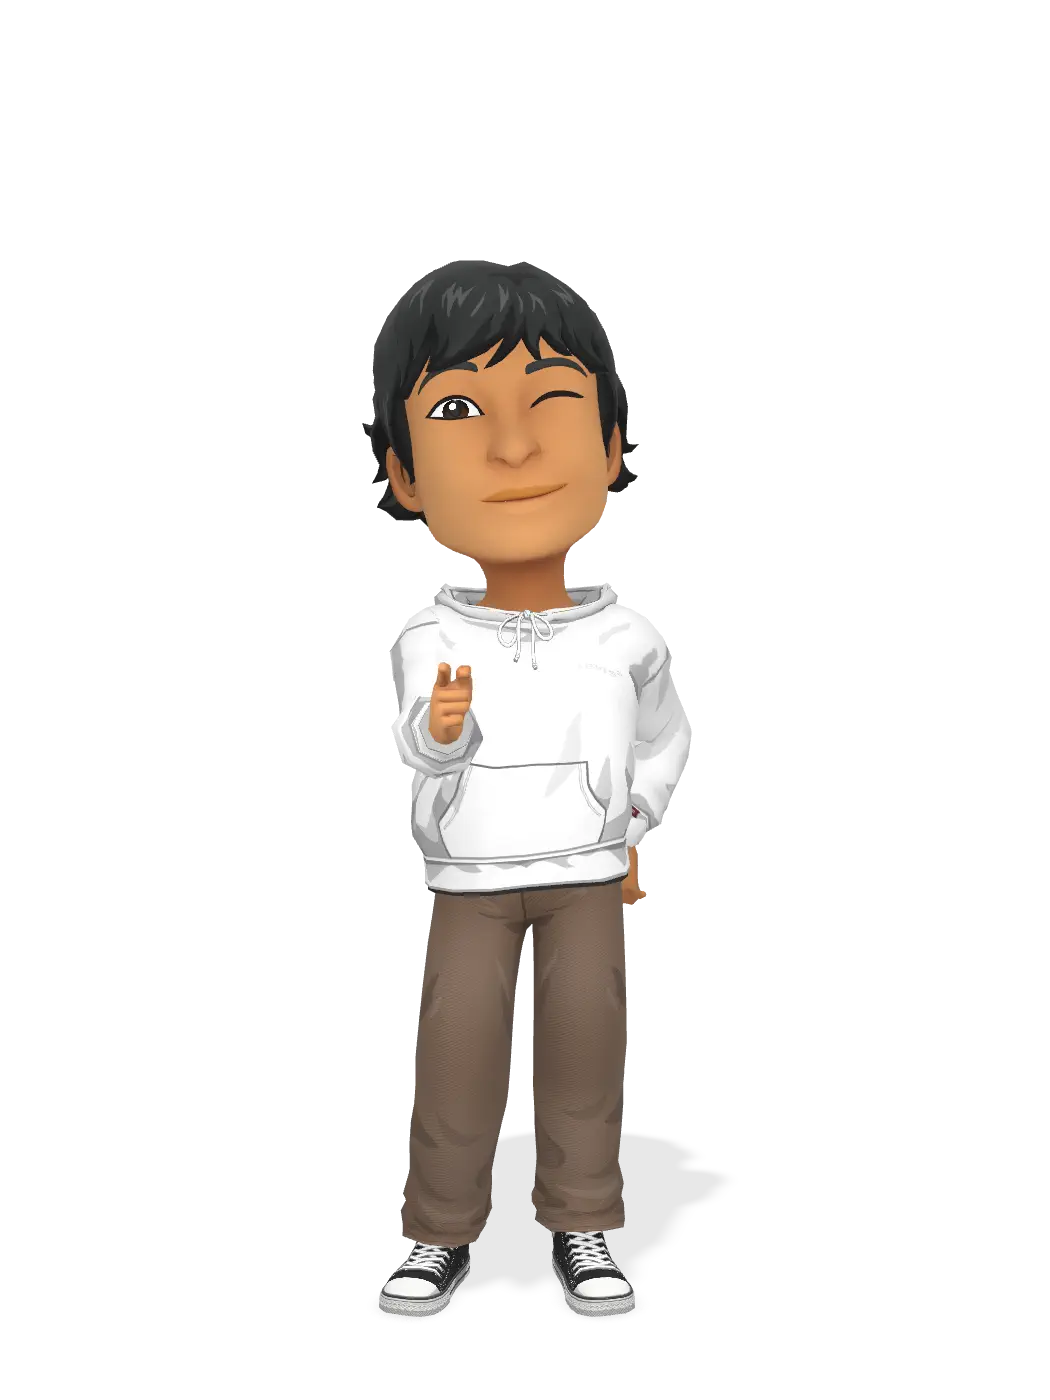 3D Bitmoji for jehrardaguilar avatar